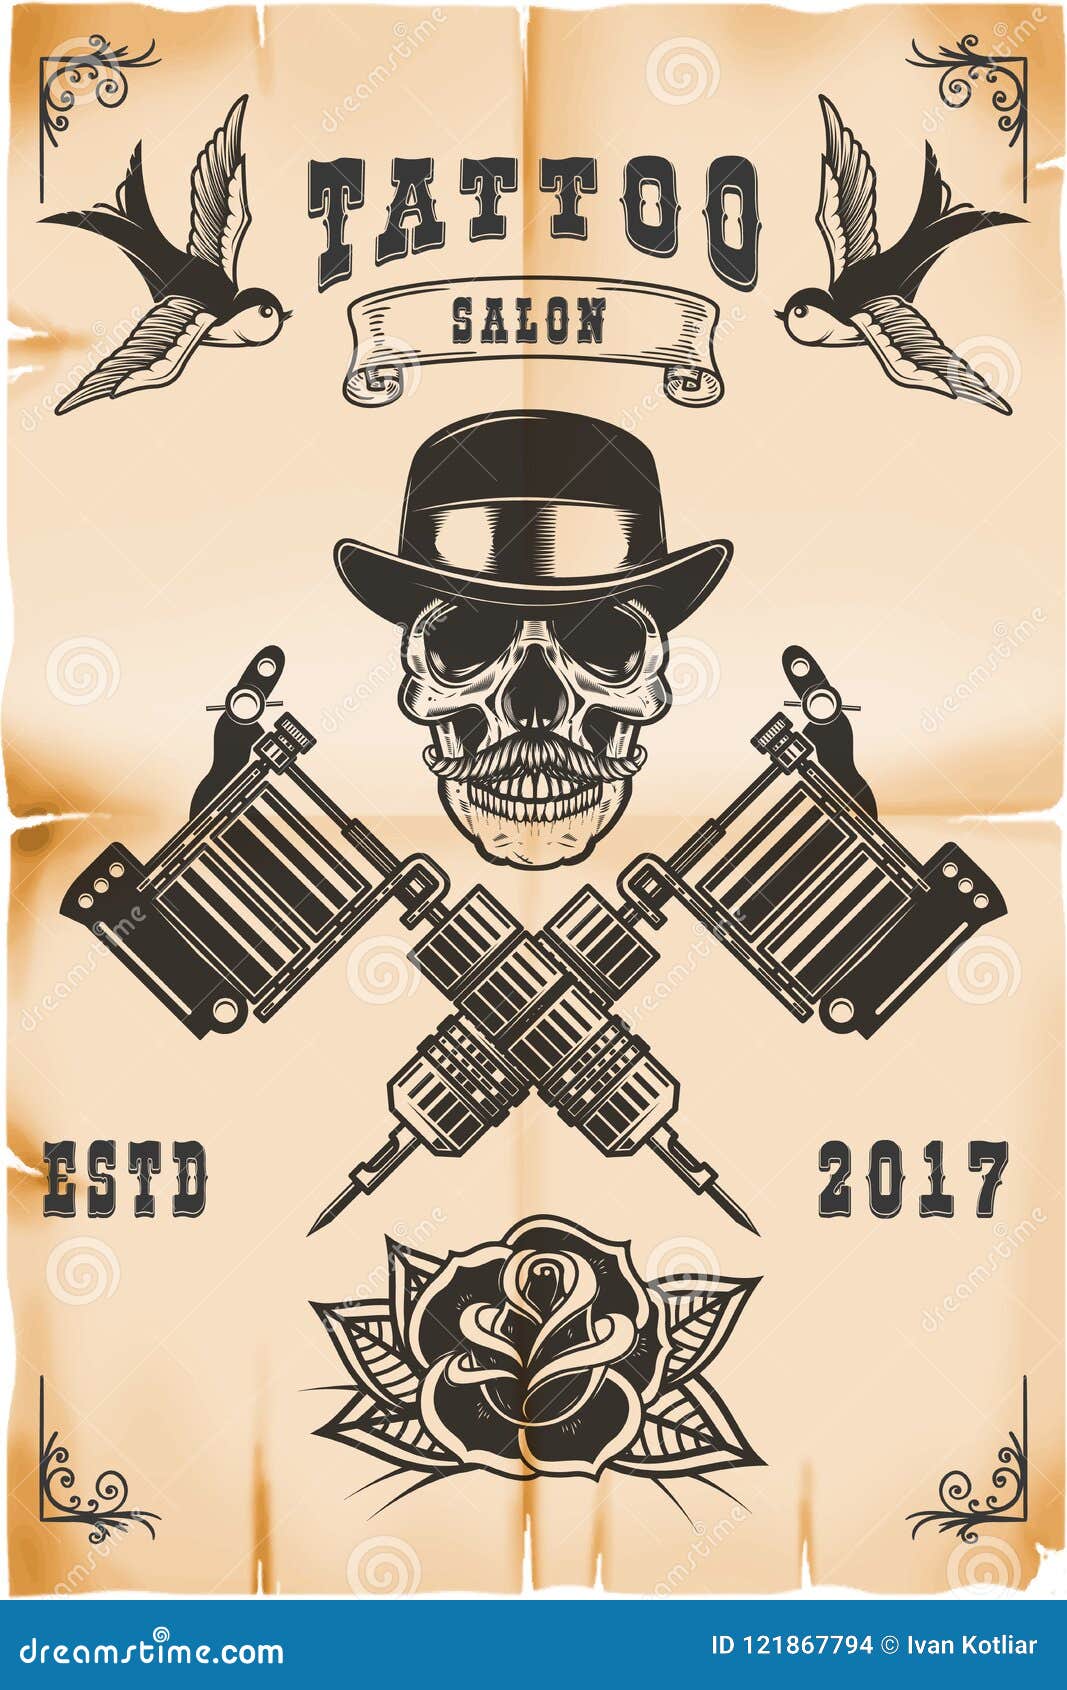 Free PSD  Tattoo studio poster design template